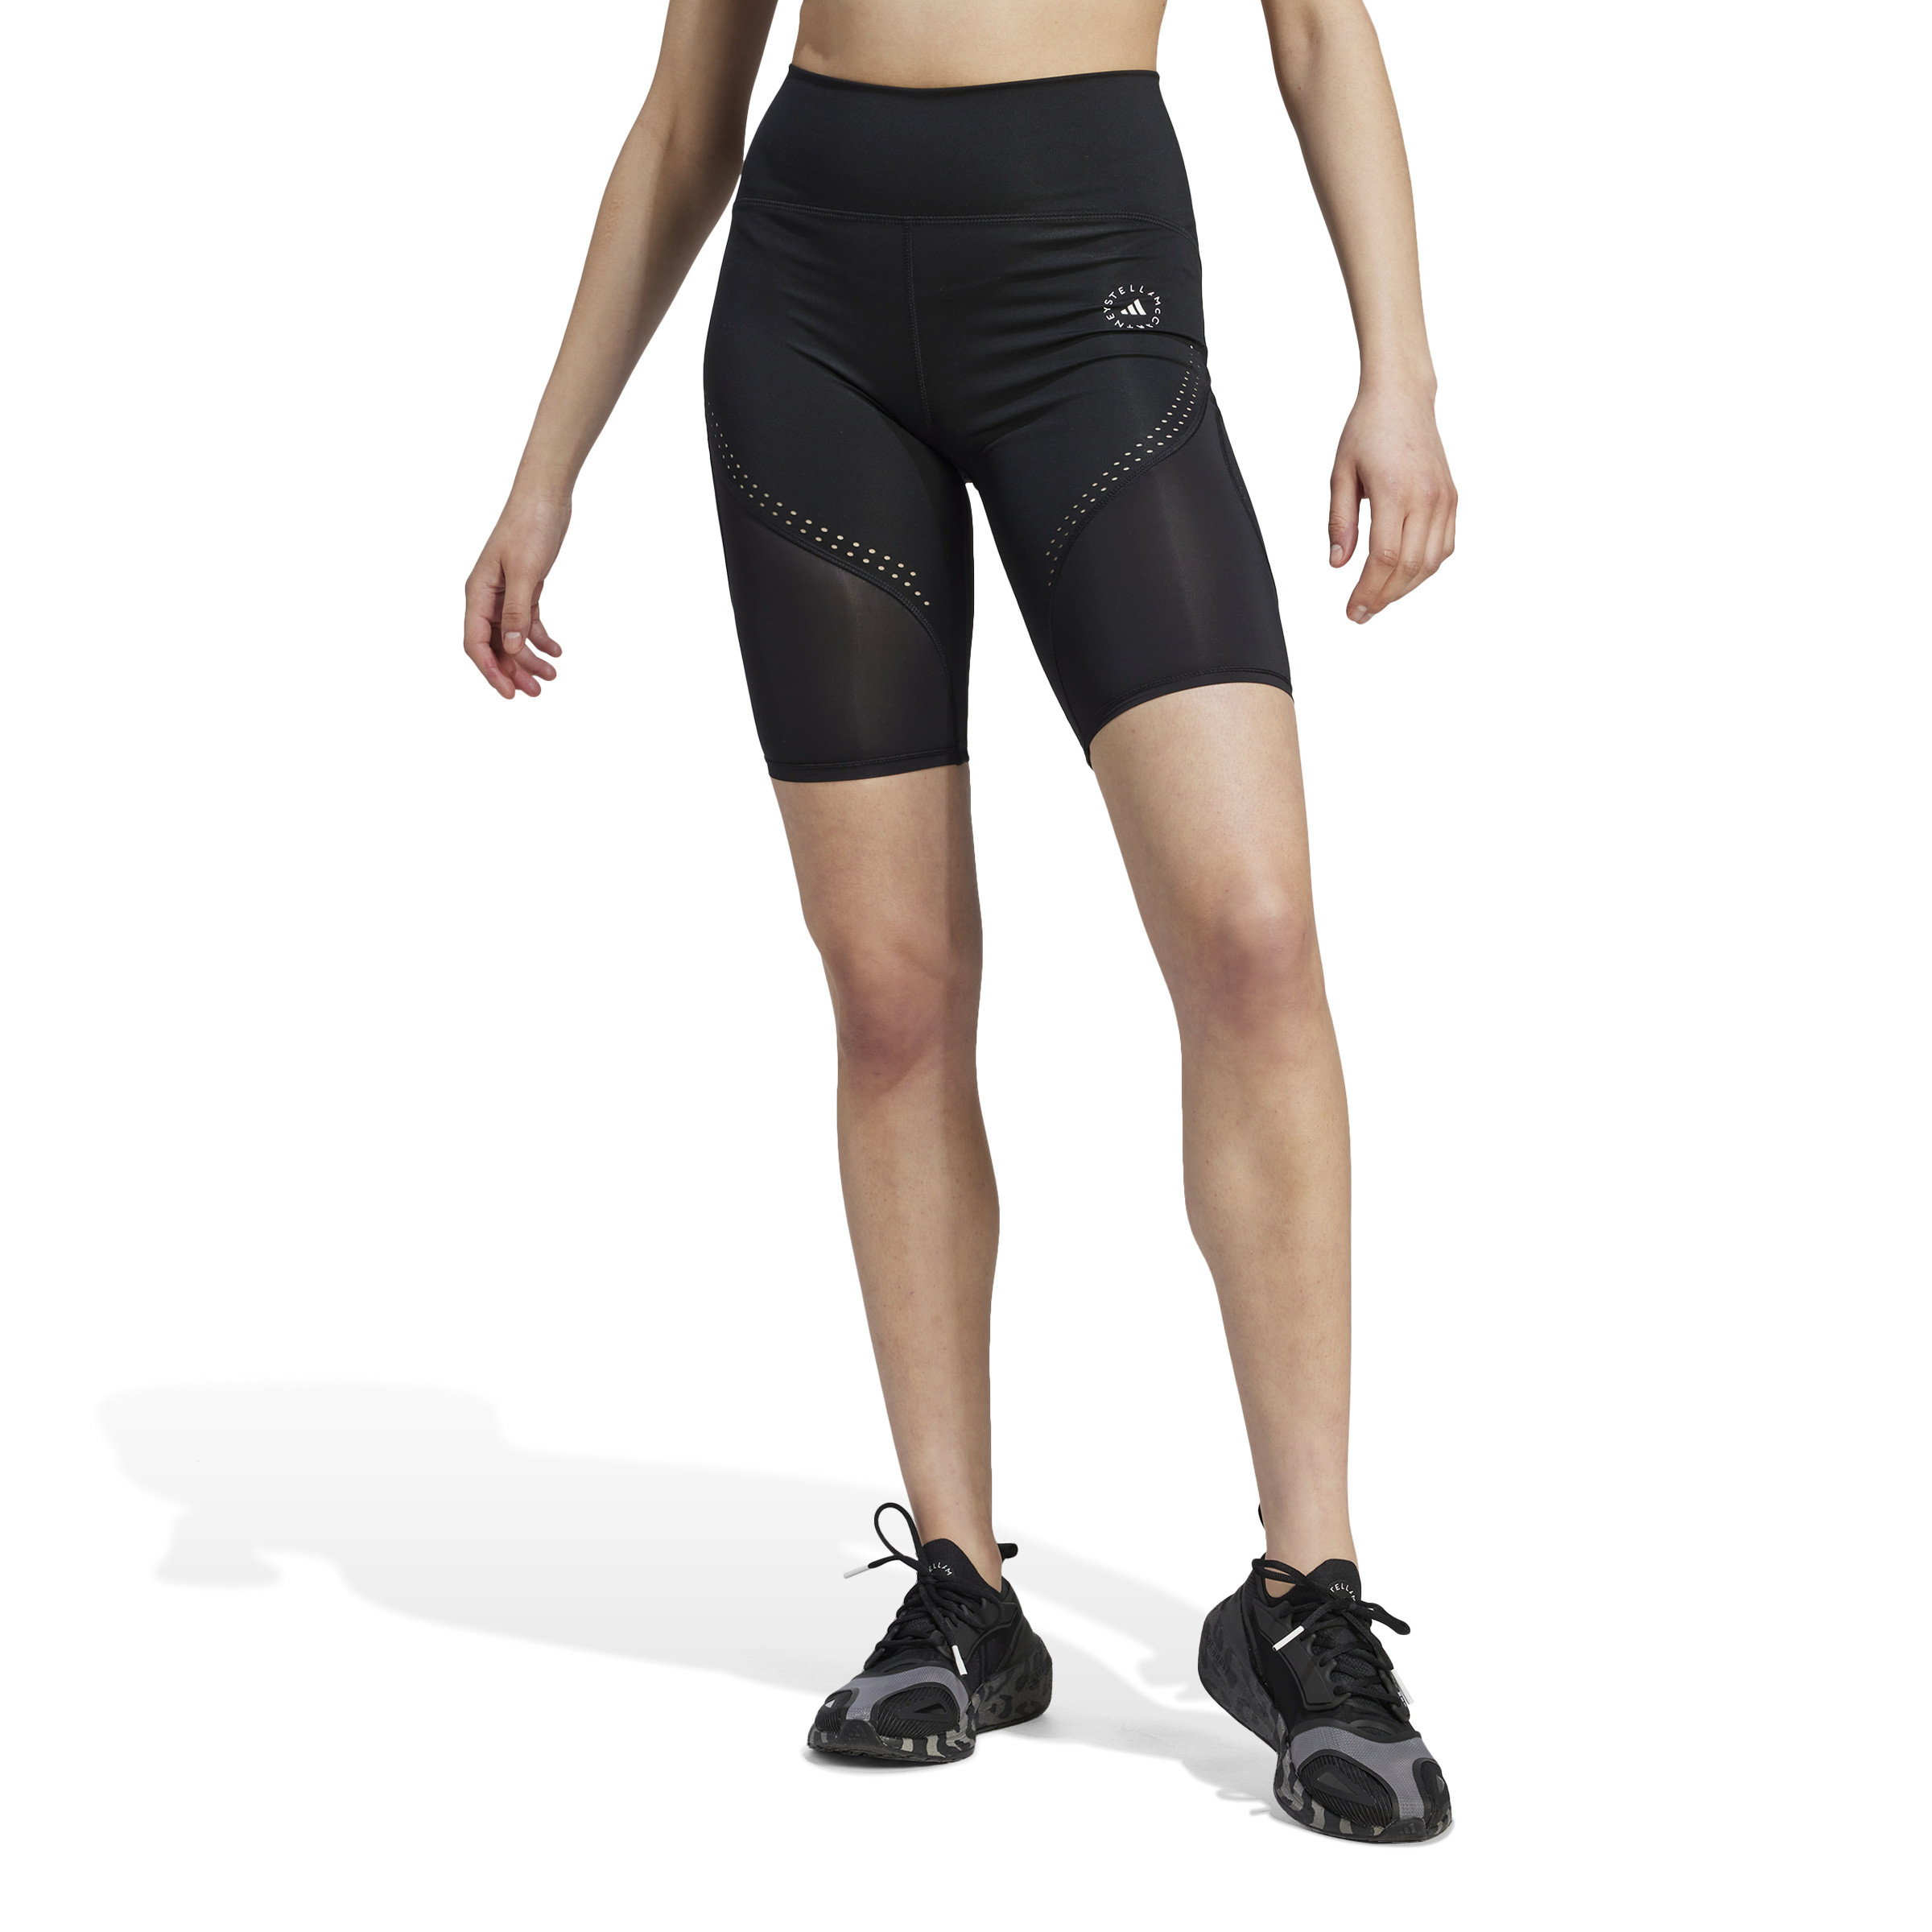 Adidas by Stella McCartney - TruePurpose Optime Bike Training Leggings, Black, large image number 5